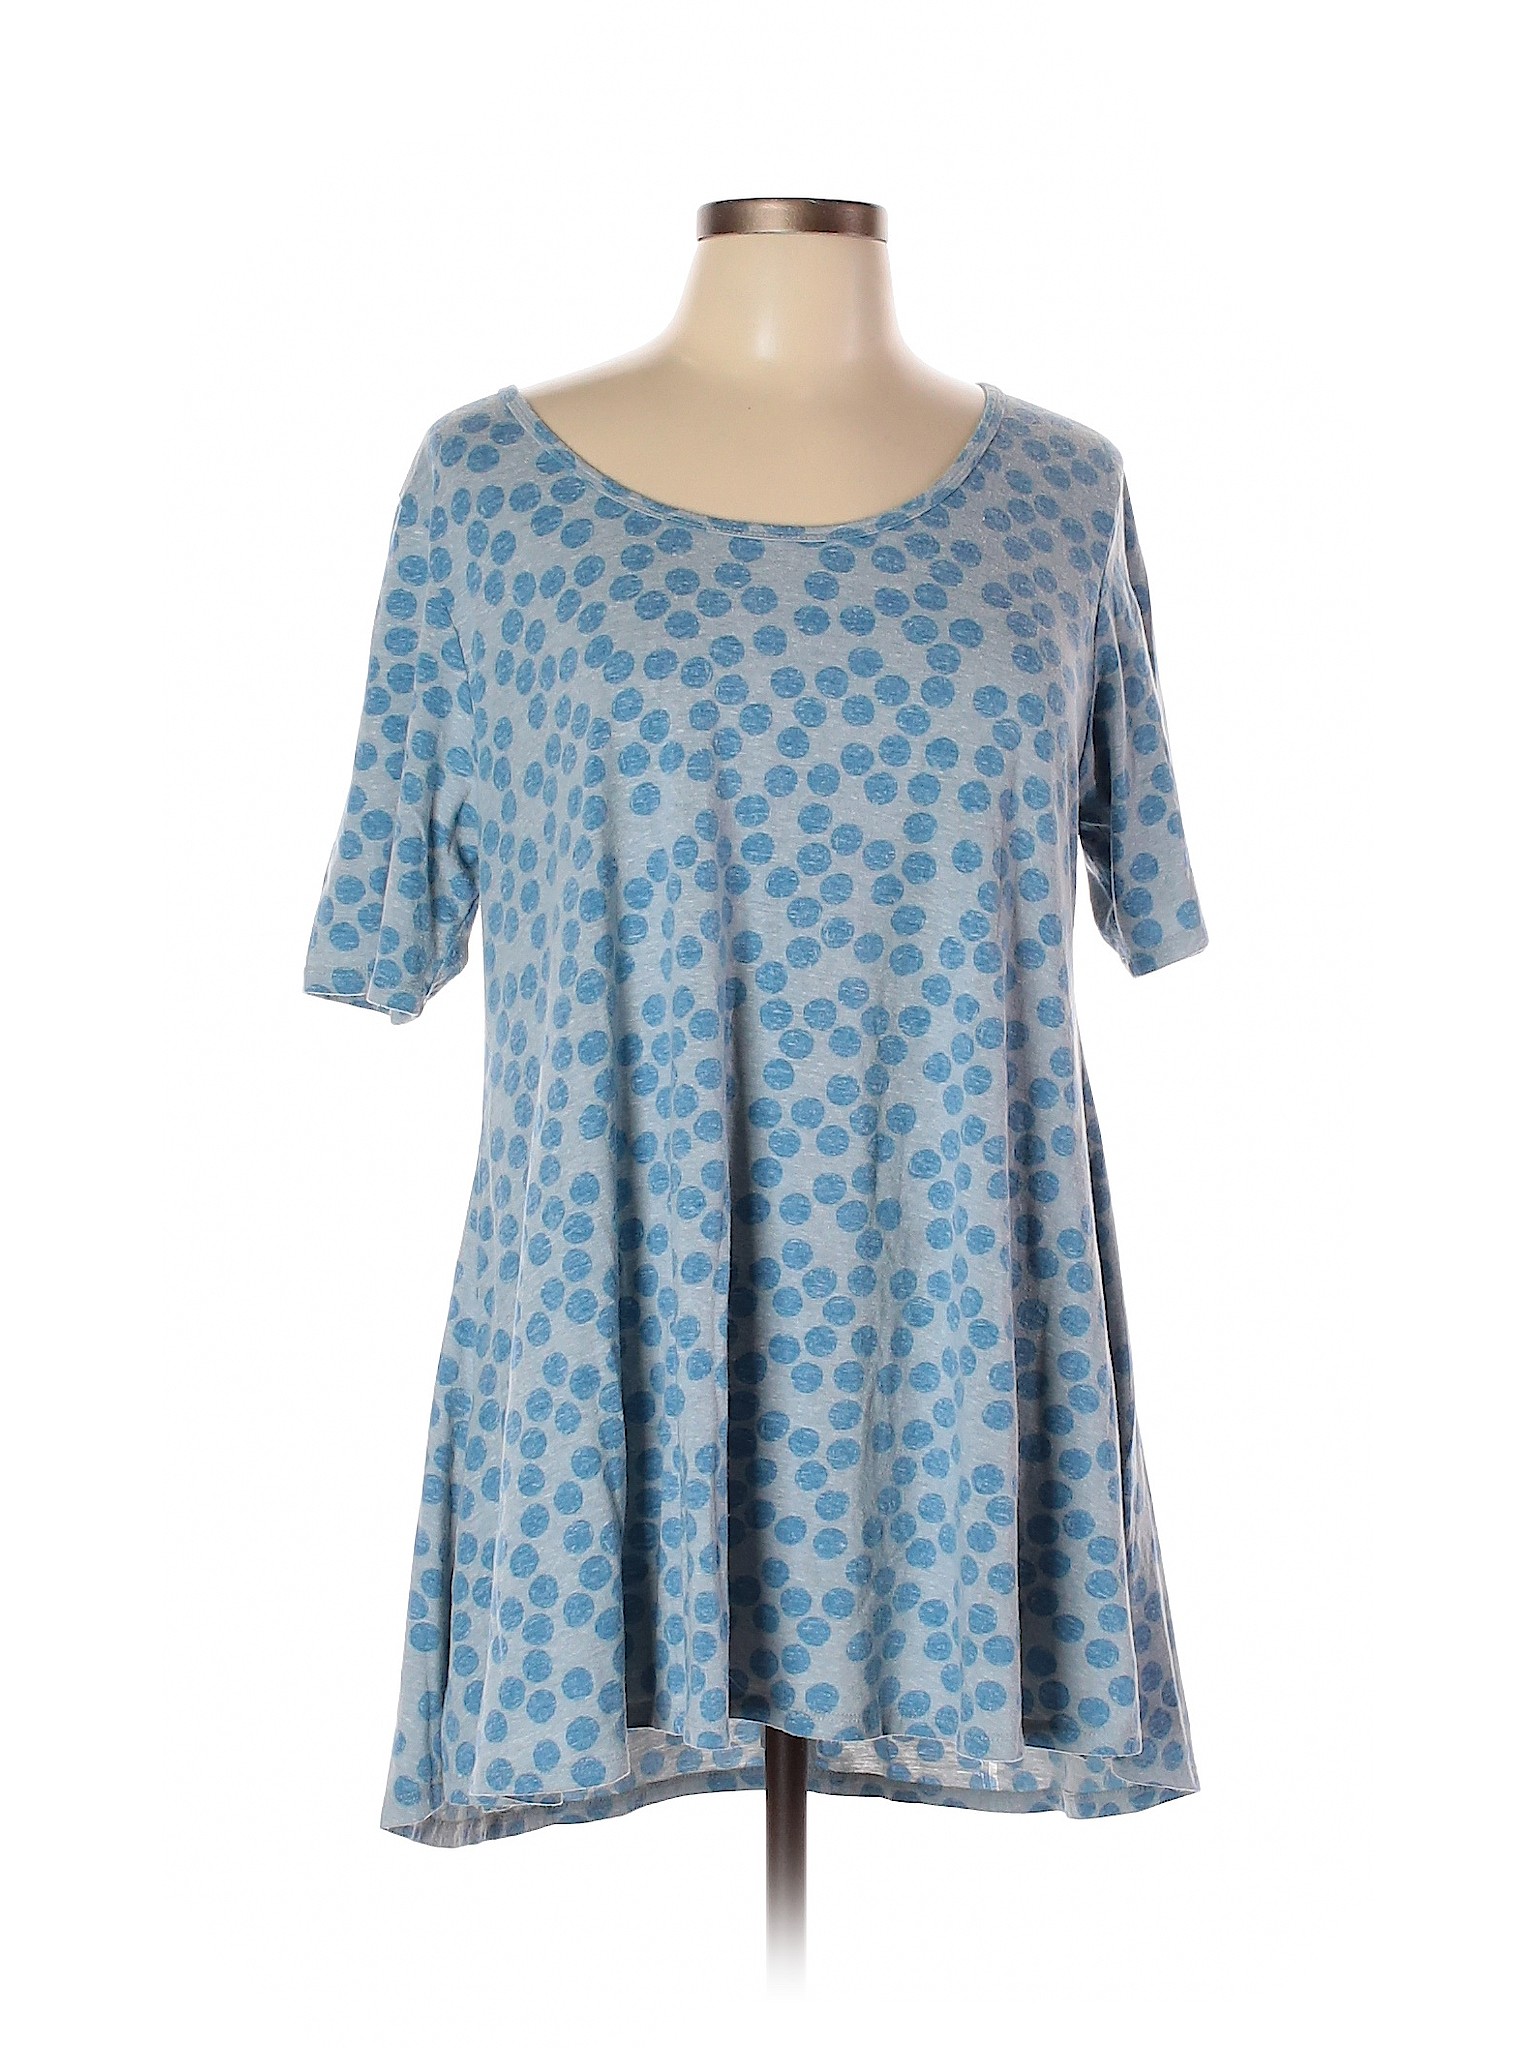 Lularoe Women Blue Short Sleeve T-Shirt L | eBay